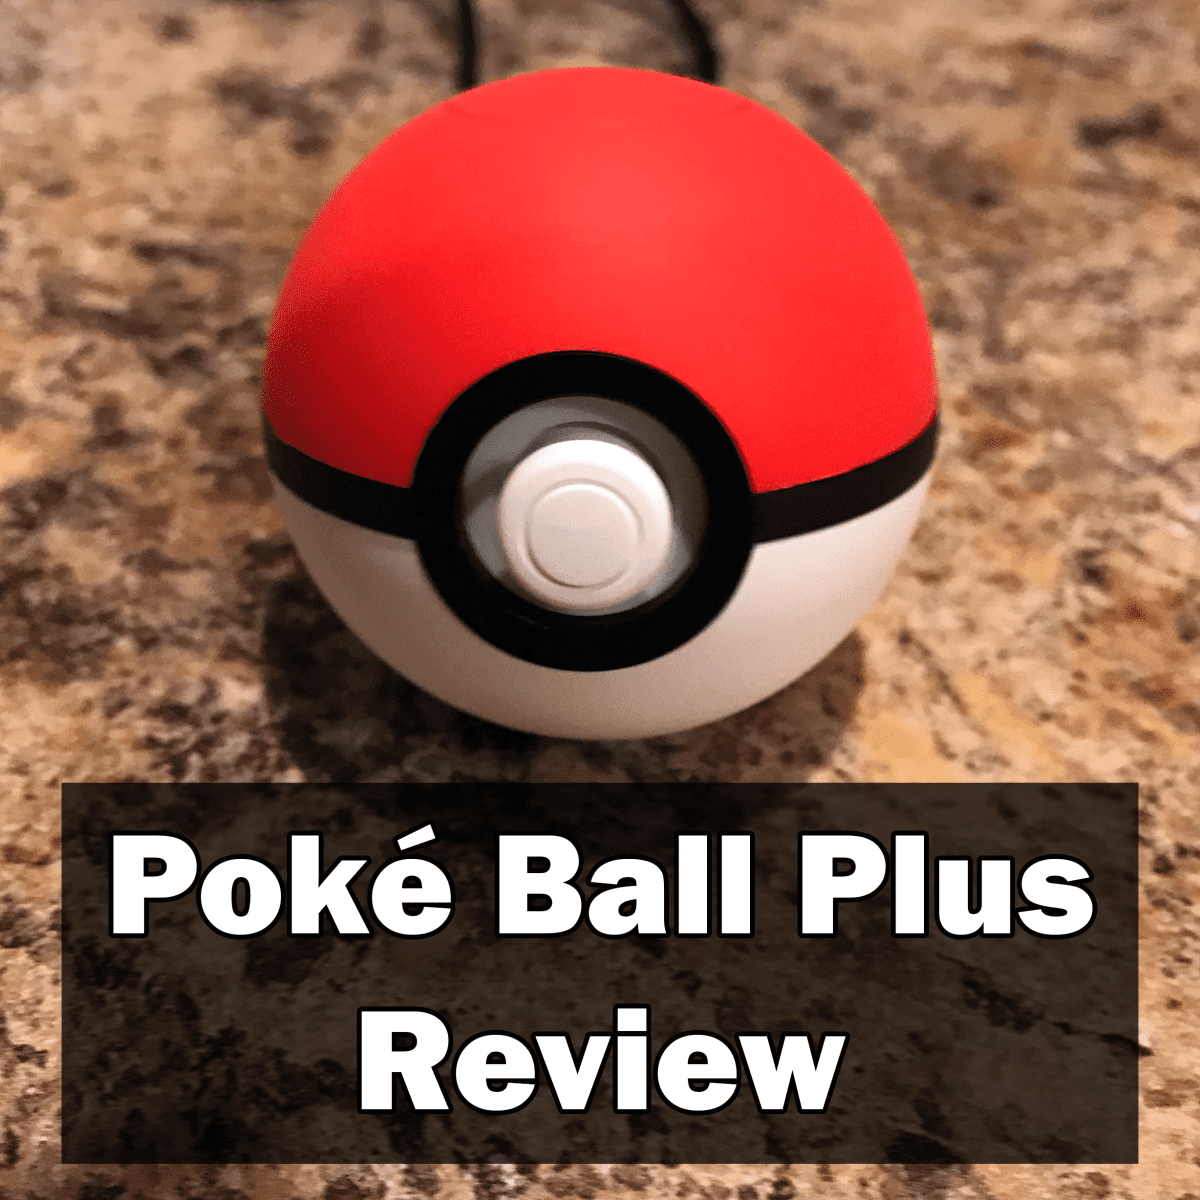 Pokémon HeartGold e SoulSilver Pokémon GO Eevee Poké Ball, pokemon